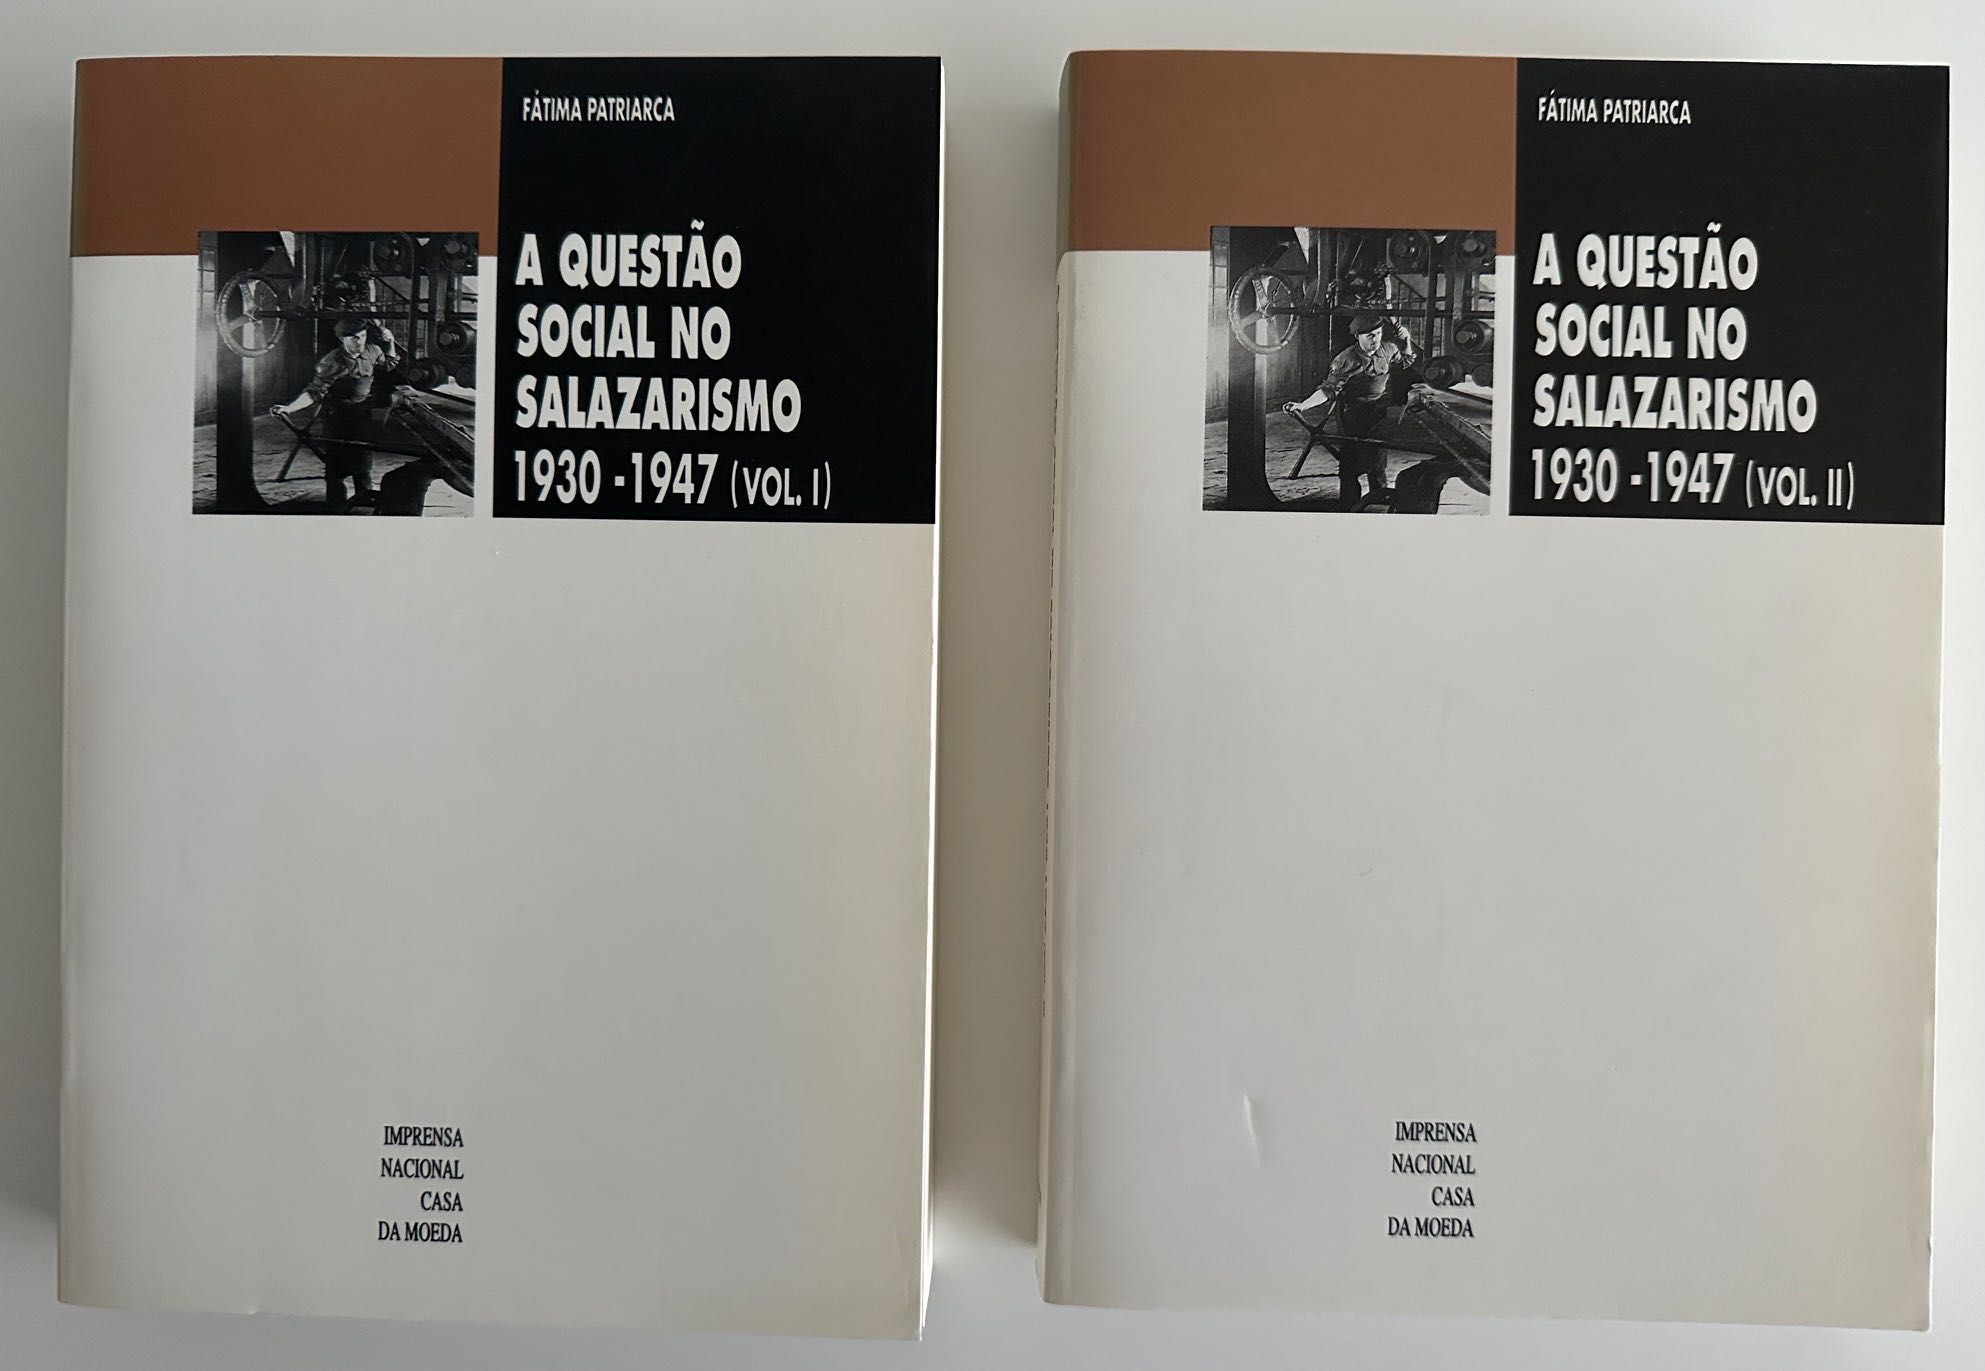 A Questão Social no Salazarismo 1930/1947 - Fátima Patriarca - 2 vols